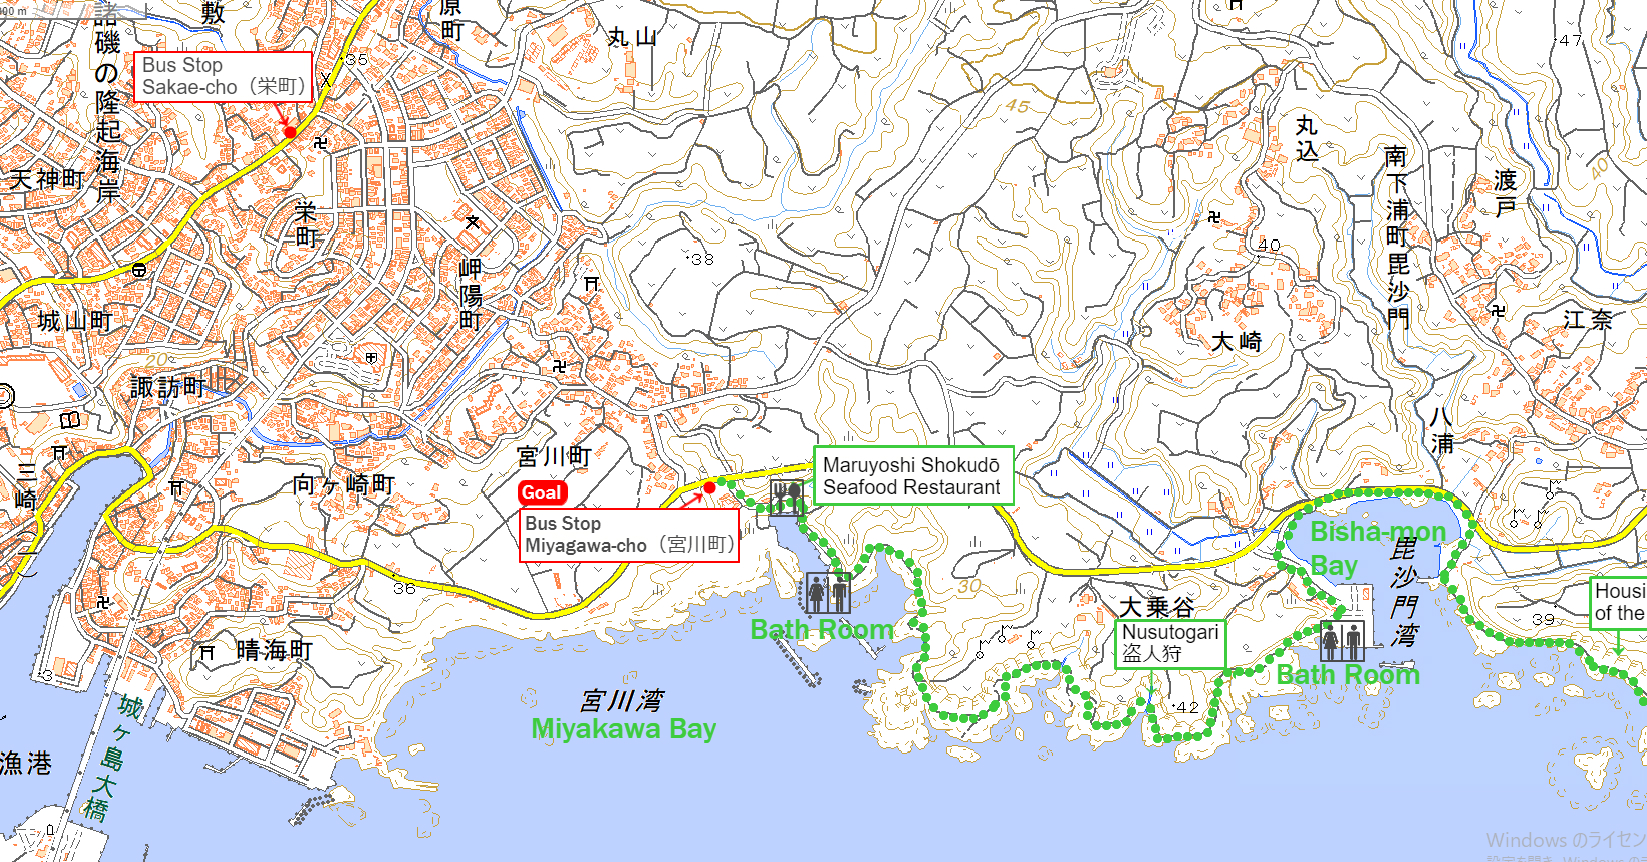 The latter half of Miura Reef Route(the Miura Gansho no Michi)